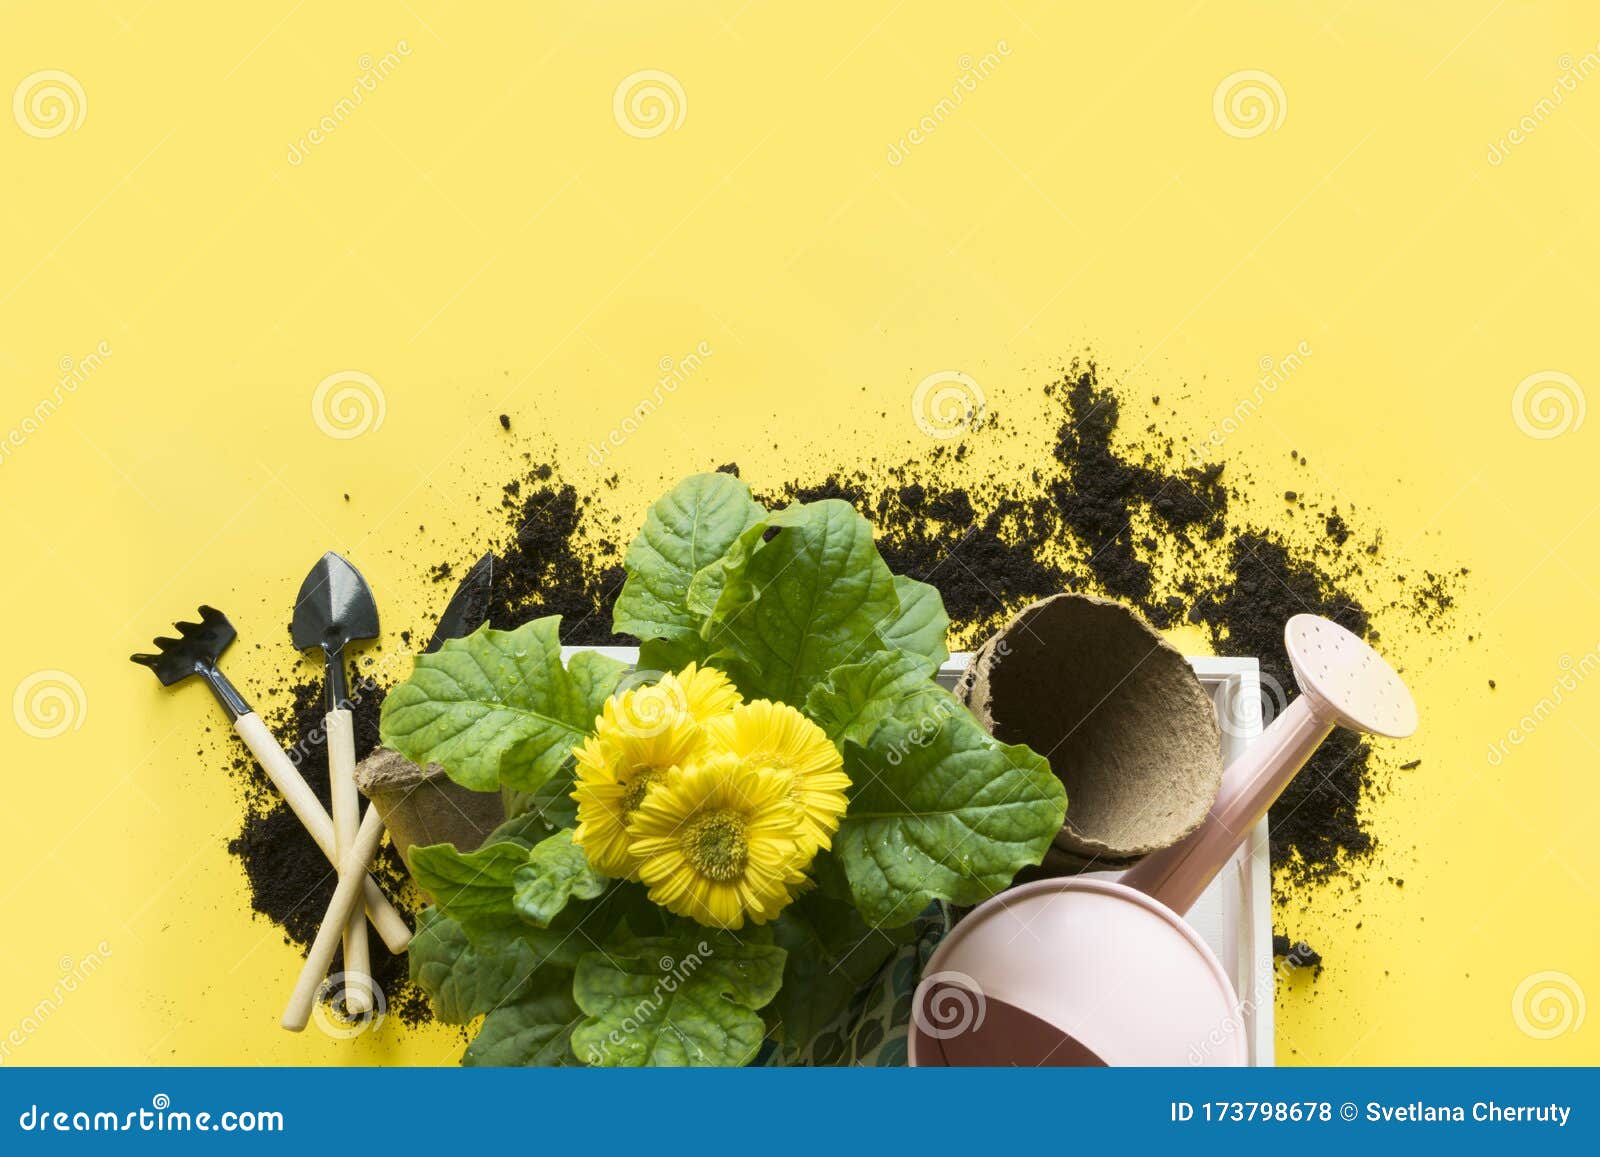 yellow gerbera, flowers in pot, gardening tolls on yellow. copy space